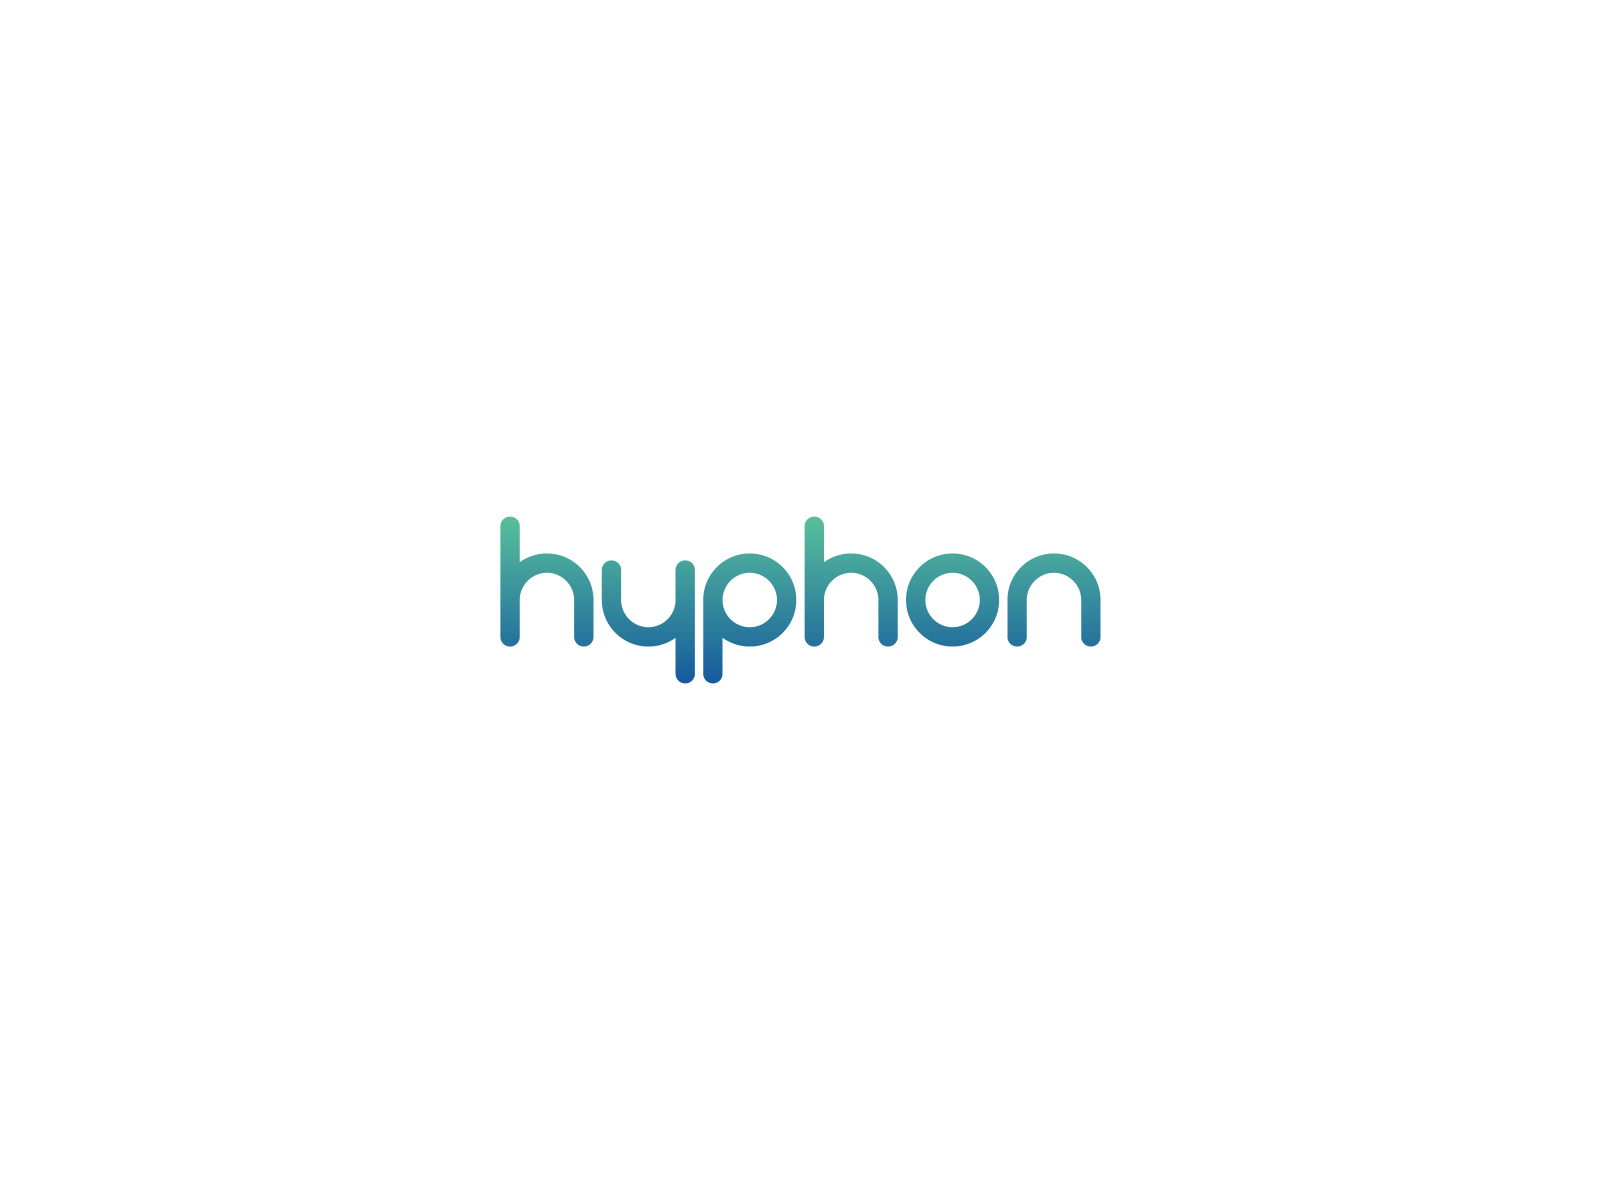 Hyphon Logo Design by Tyler Johnson on Dribbble